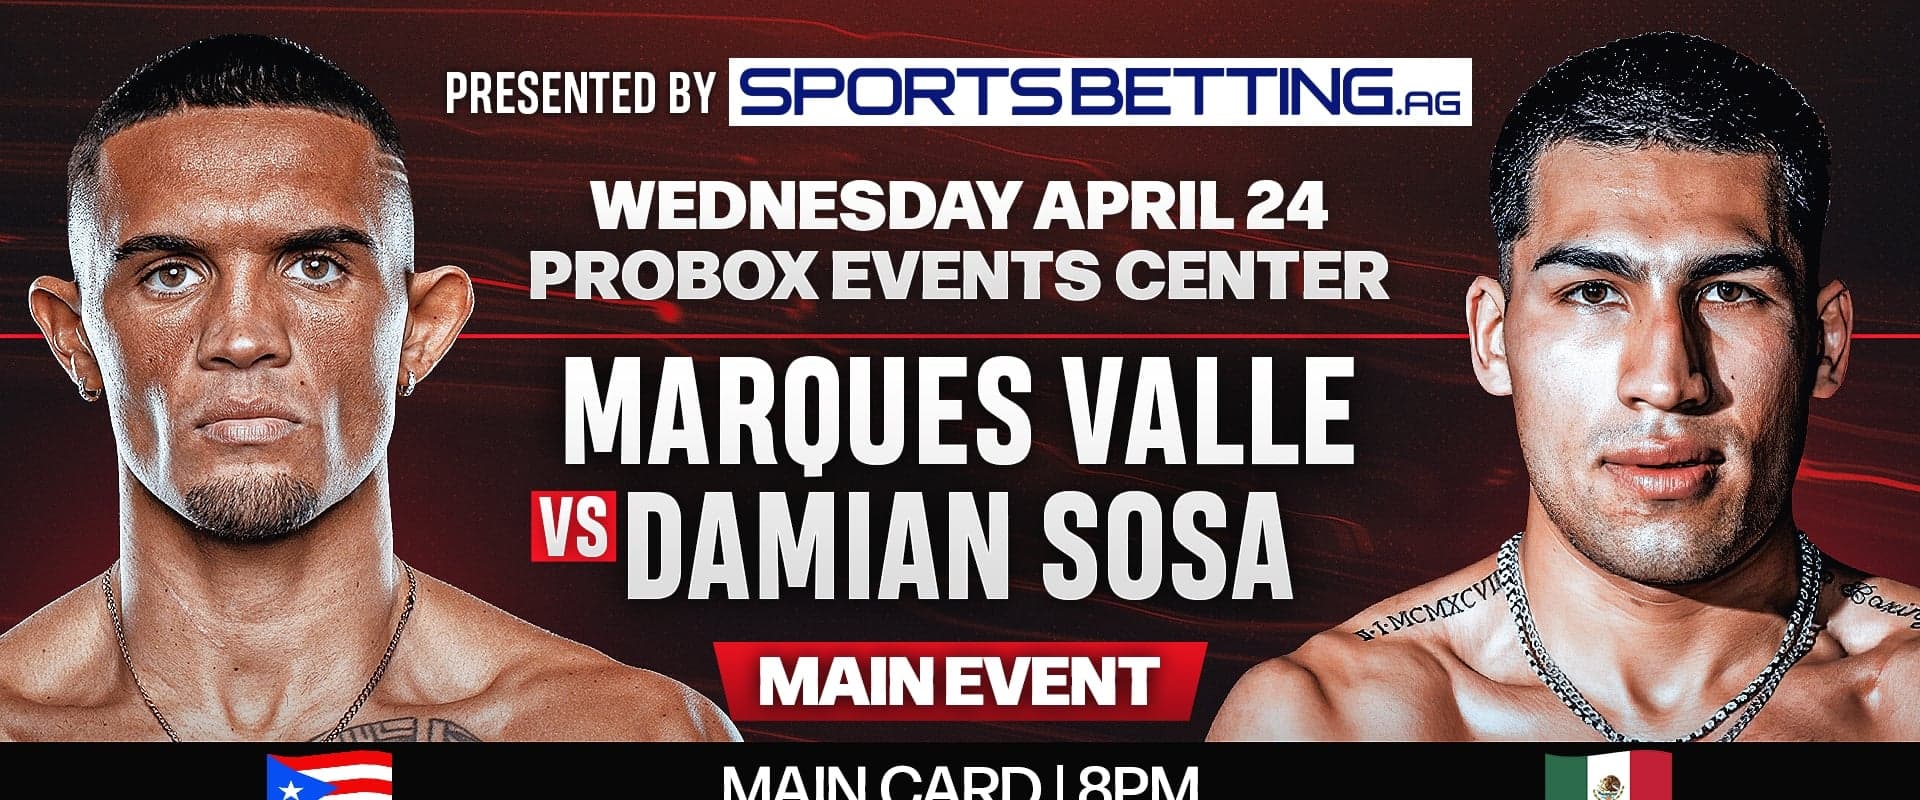 Marques Valle vs. Damian Sosa